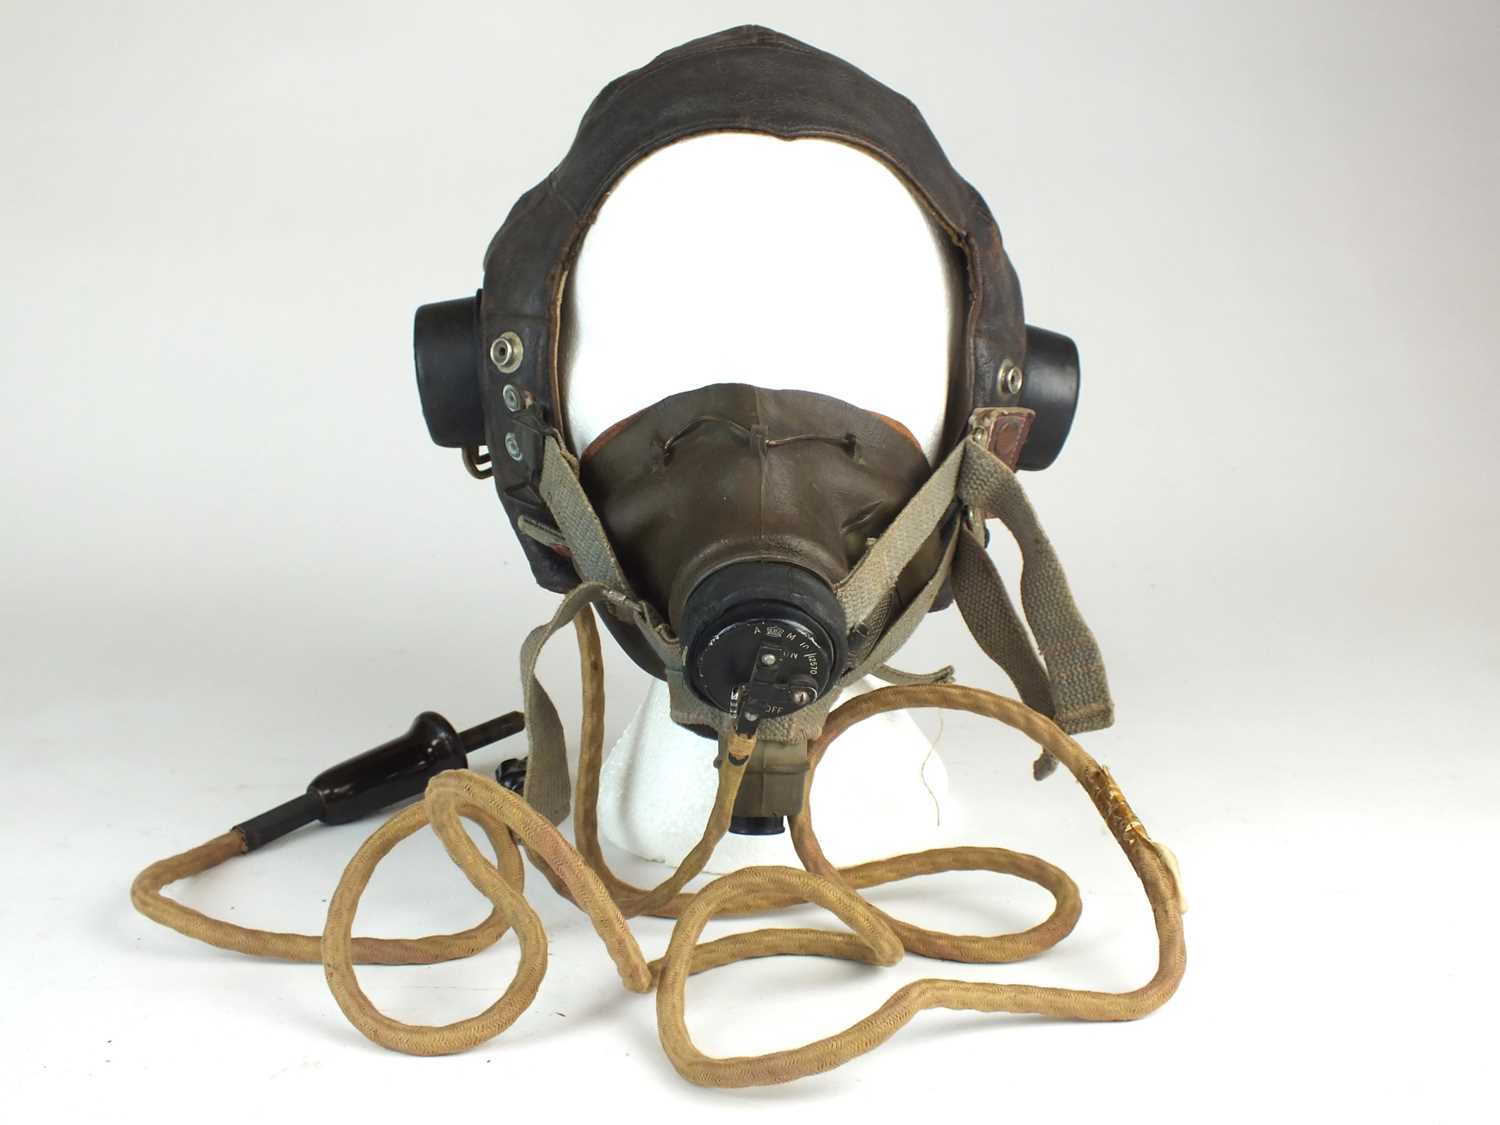 Lot 2 - British Second World War C-Type flying helmet with Type-G oxygen mask